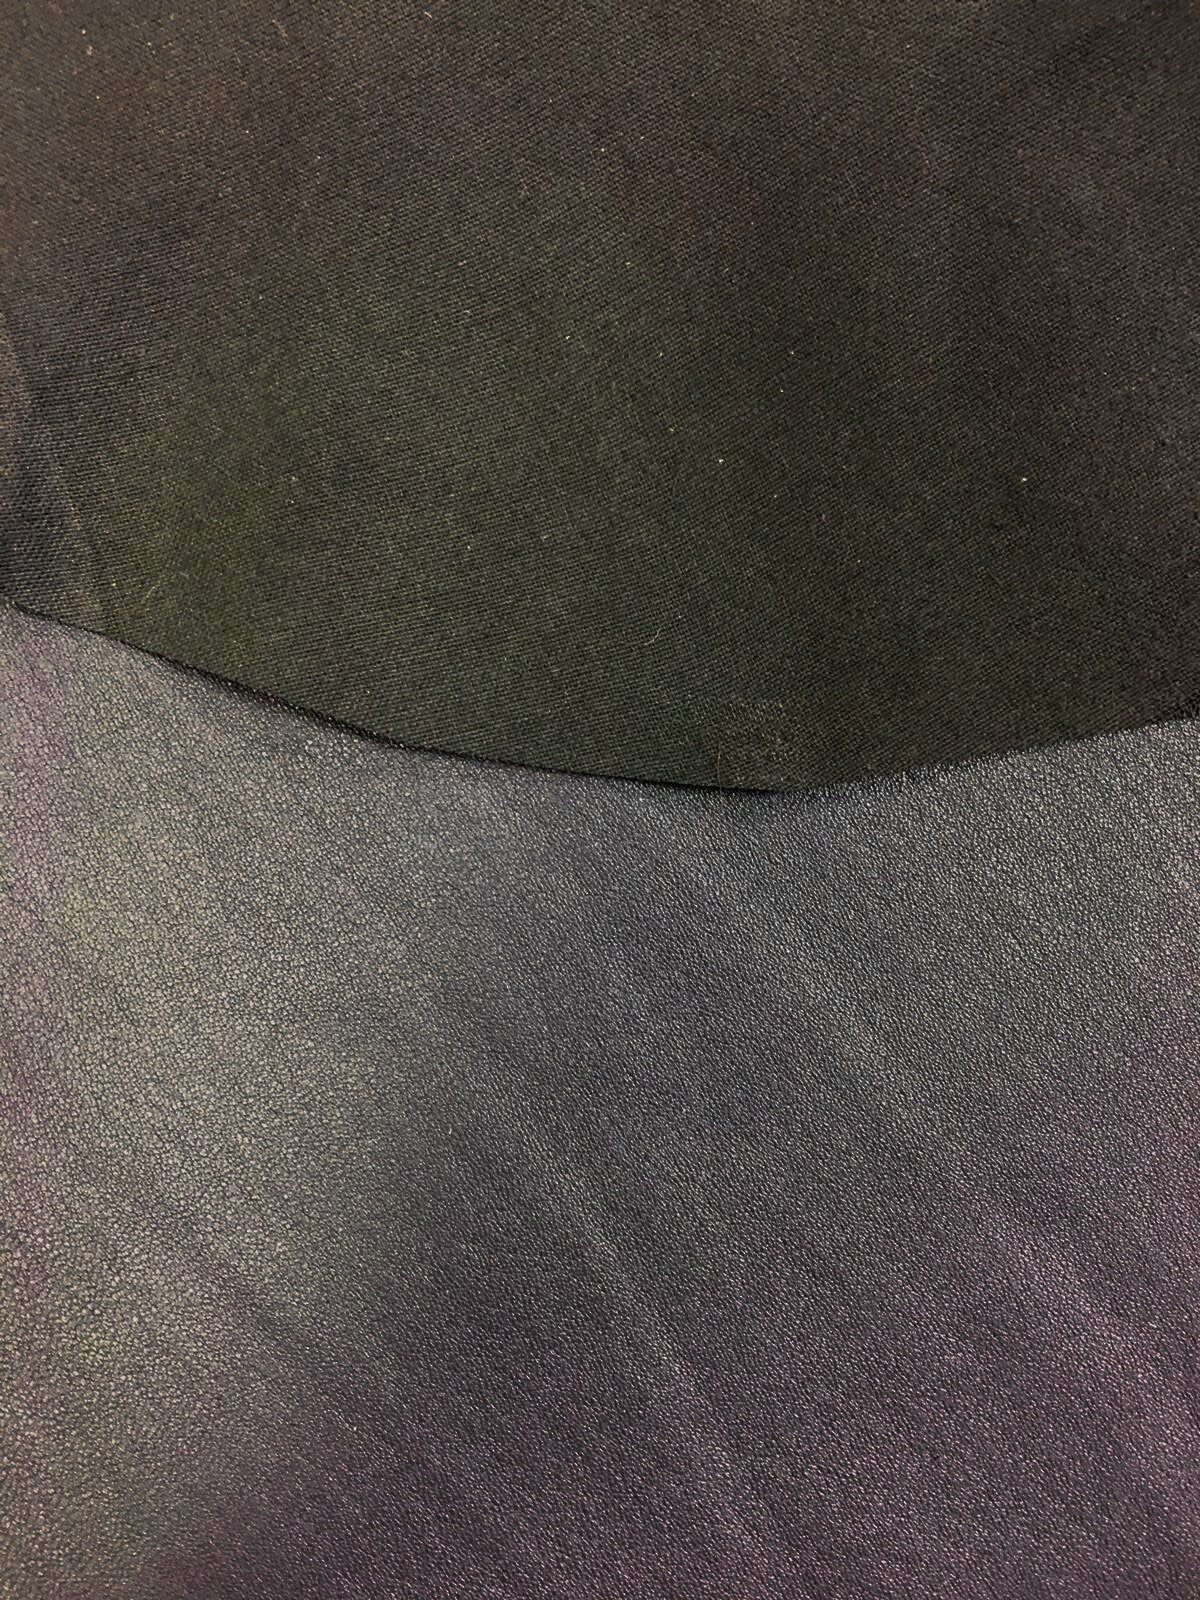 Gray Stretch Lambskin Purple-Gray Thin 0.8mm/2oz / ASPHALT 665